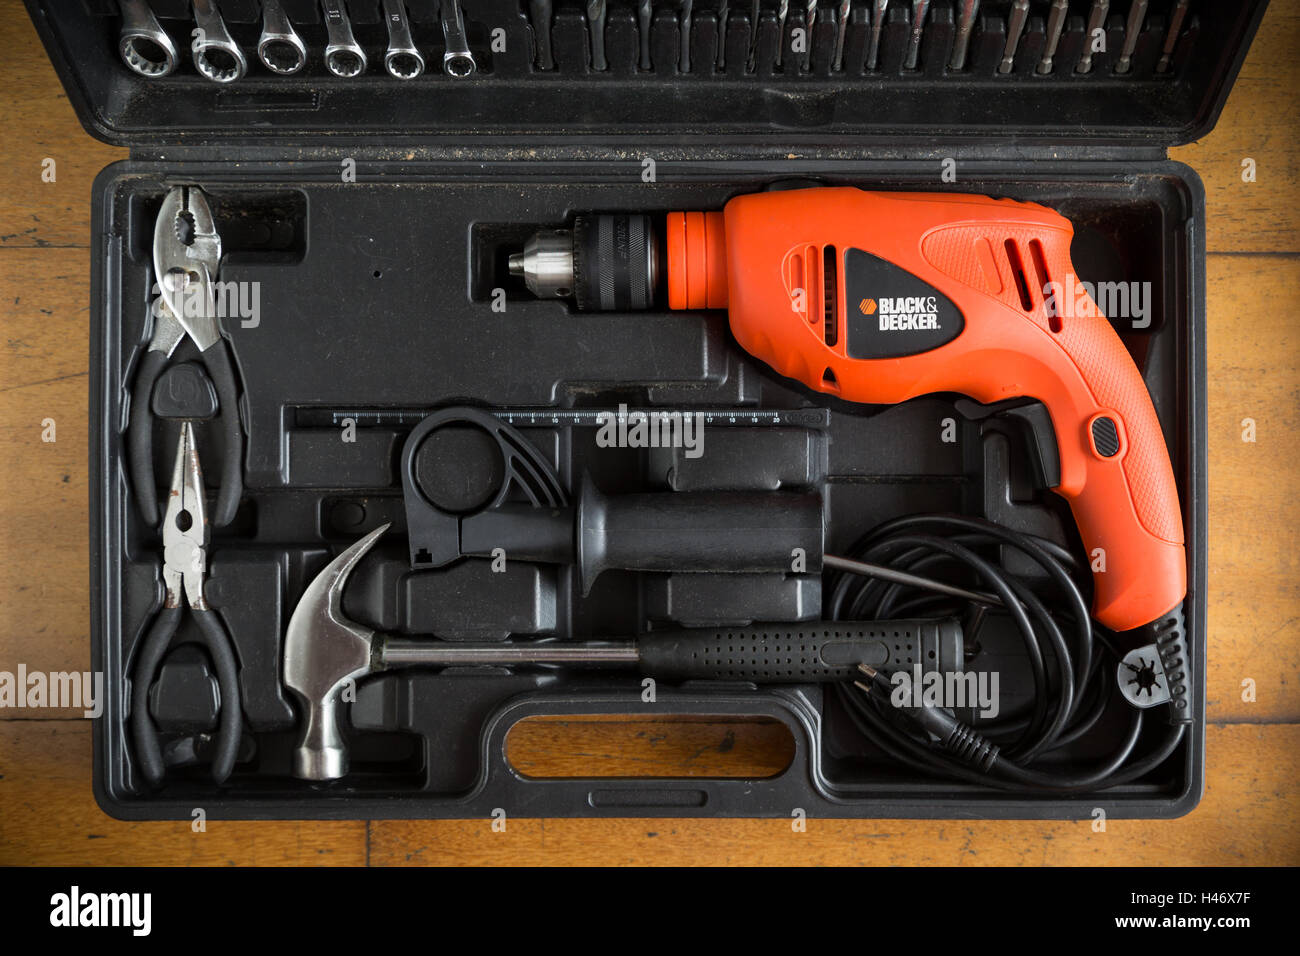 https://c8.alamy.com/comp/H46X7F/black-decker-tool-hammer-drill-kit-with-accessories-on-wooden-floor-H46X7F.jpg